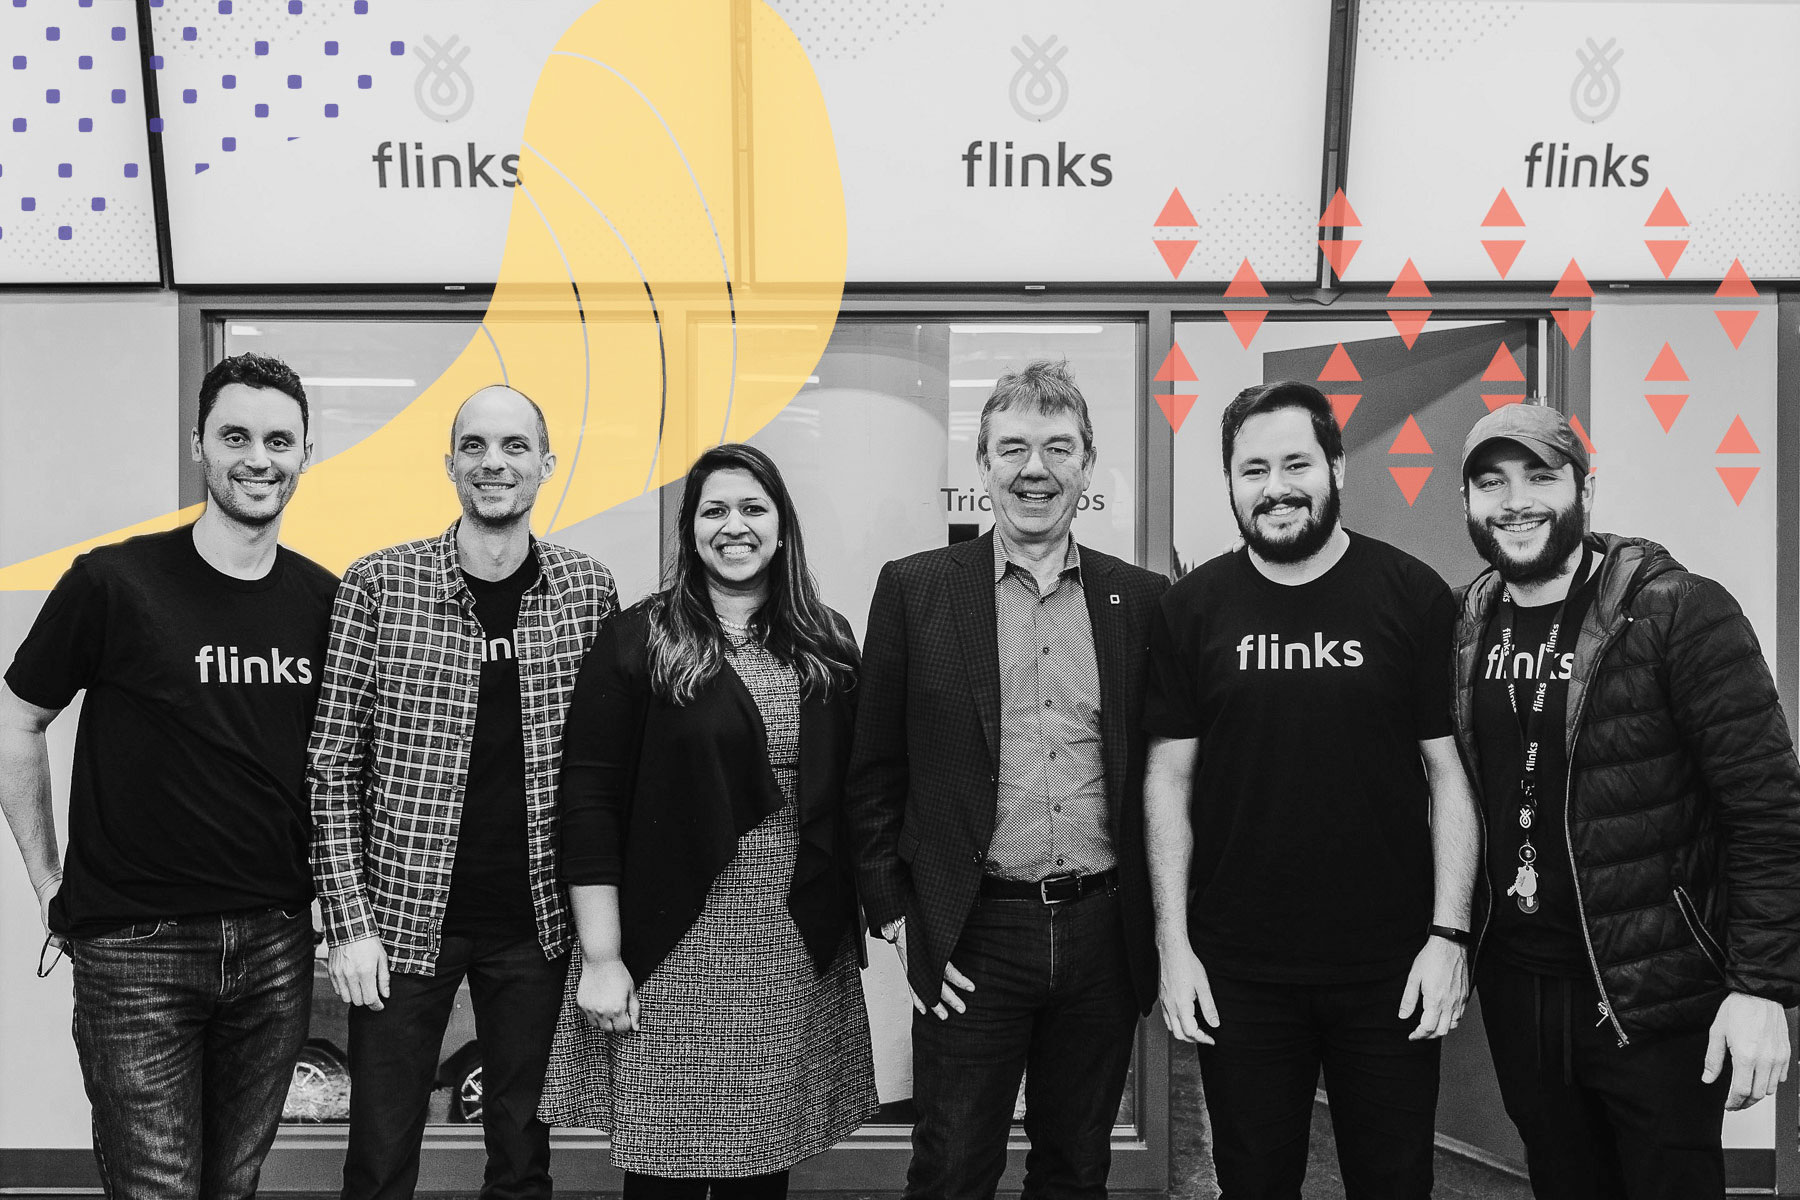 Andrew Moor visiting Flinks' office in 2019